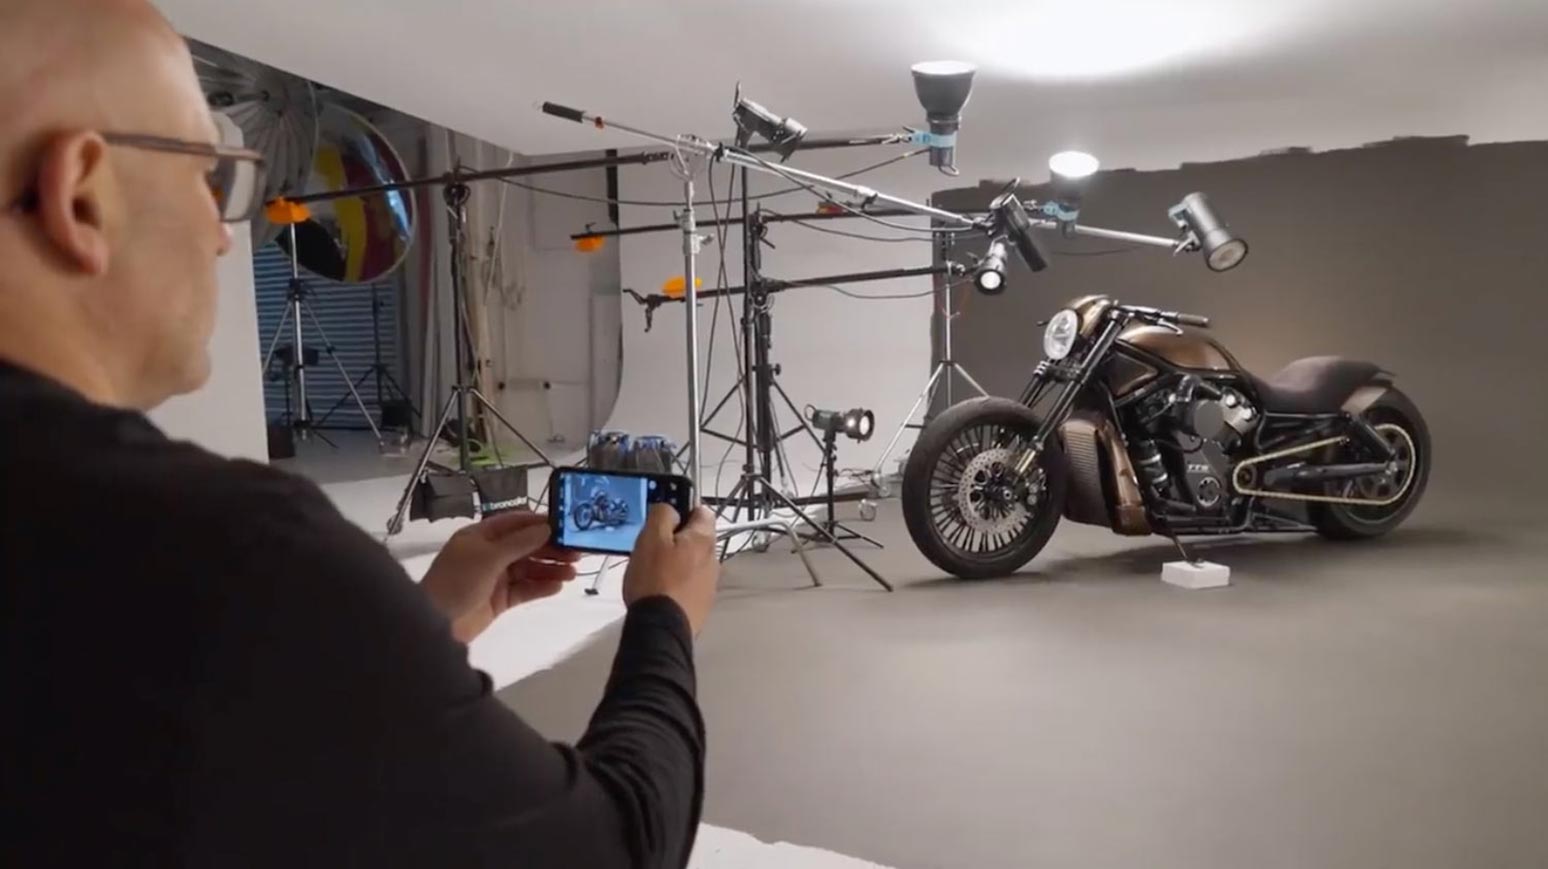 Capturing a professional image of motorbike using iPhone with studio lighting setup